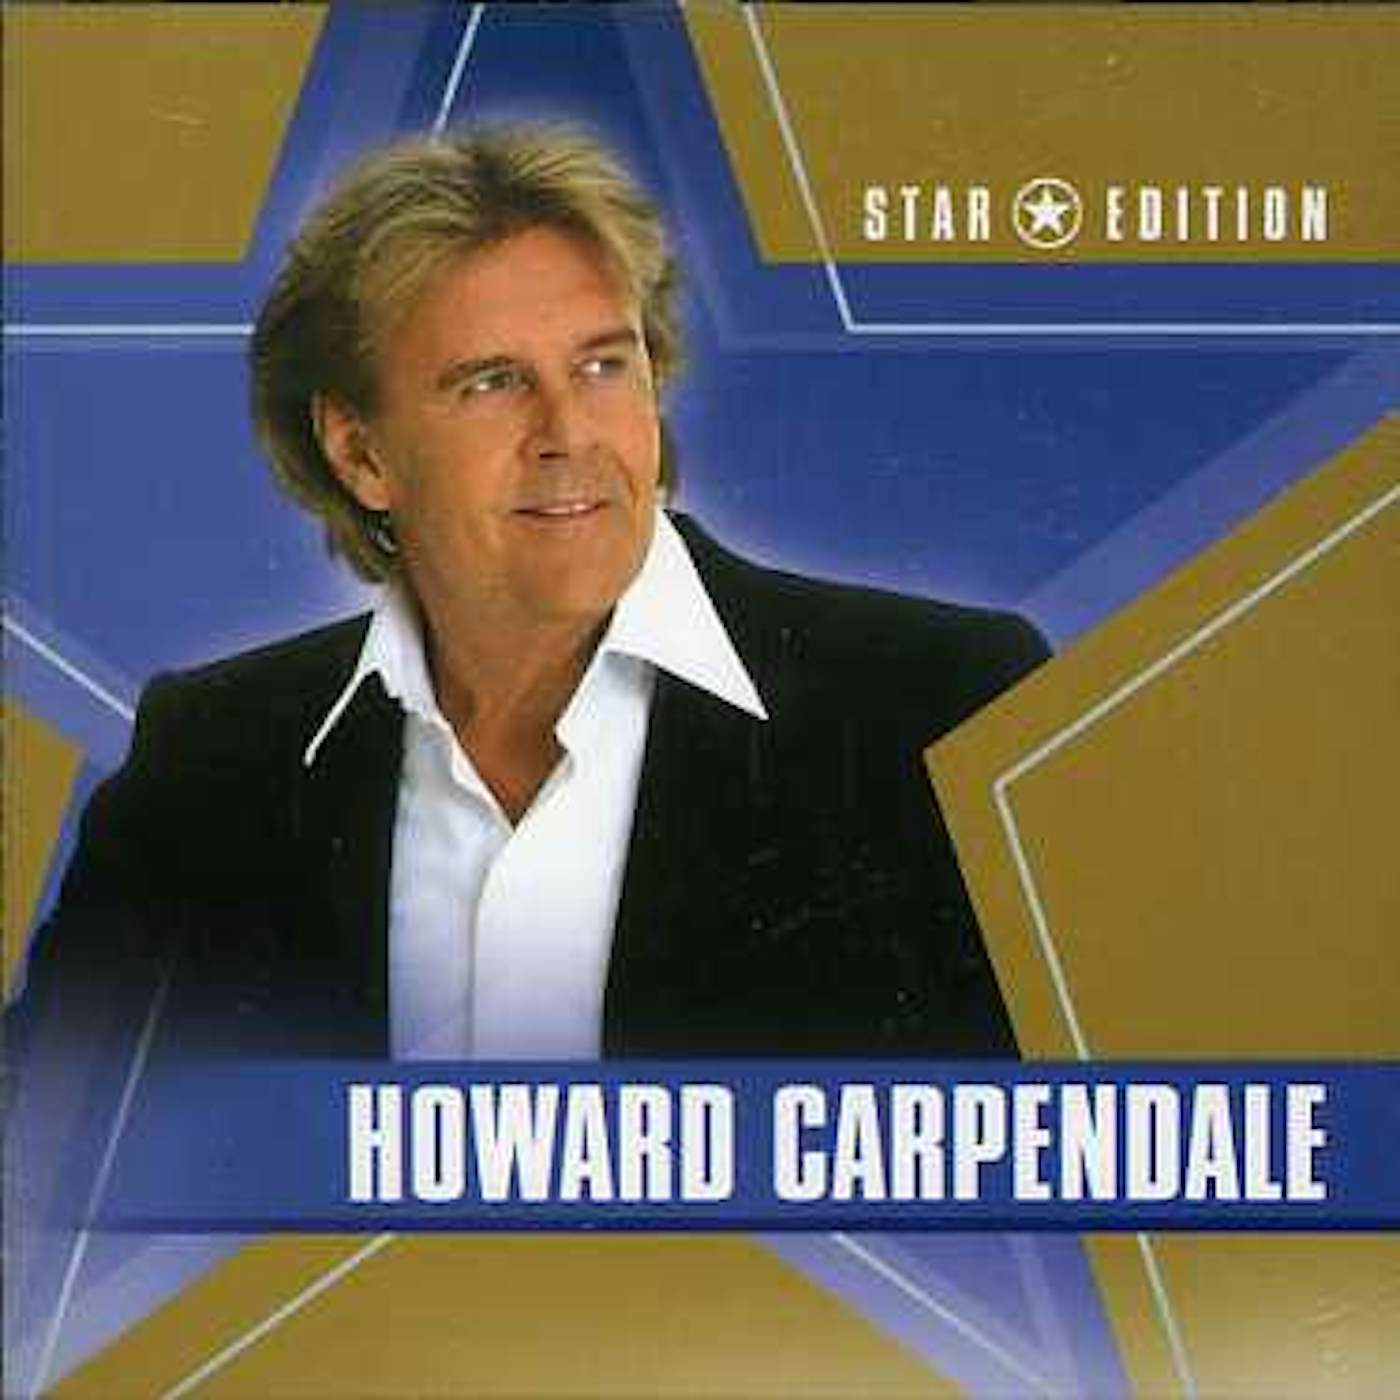 Howard Carpendale STAR EDITION CD